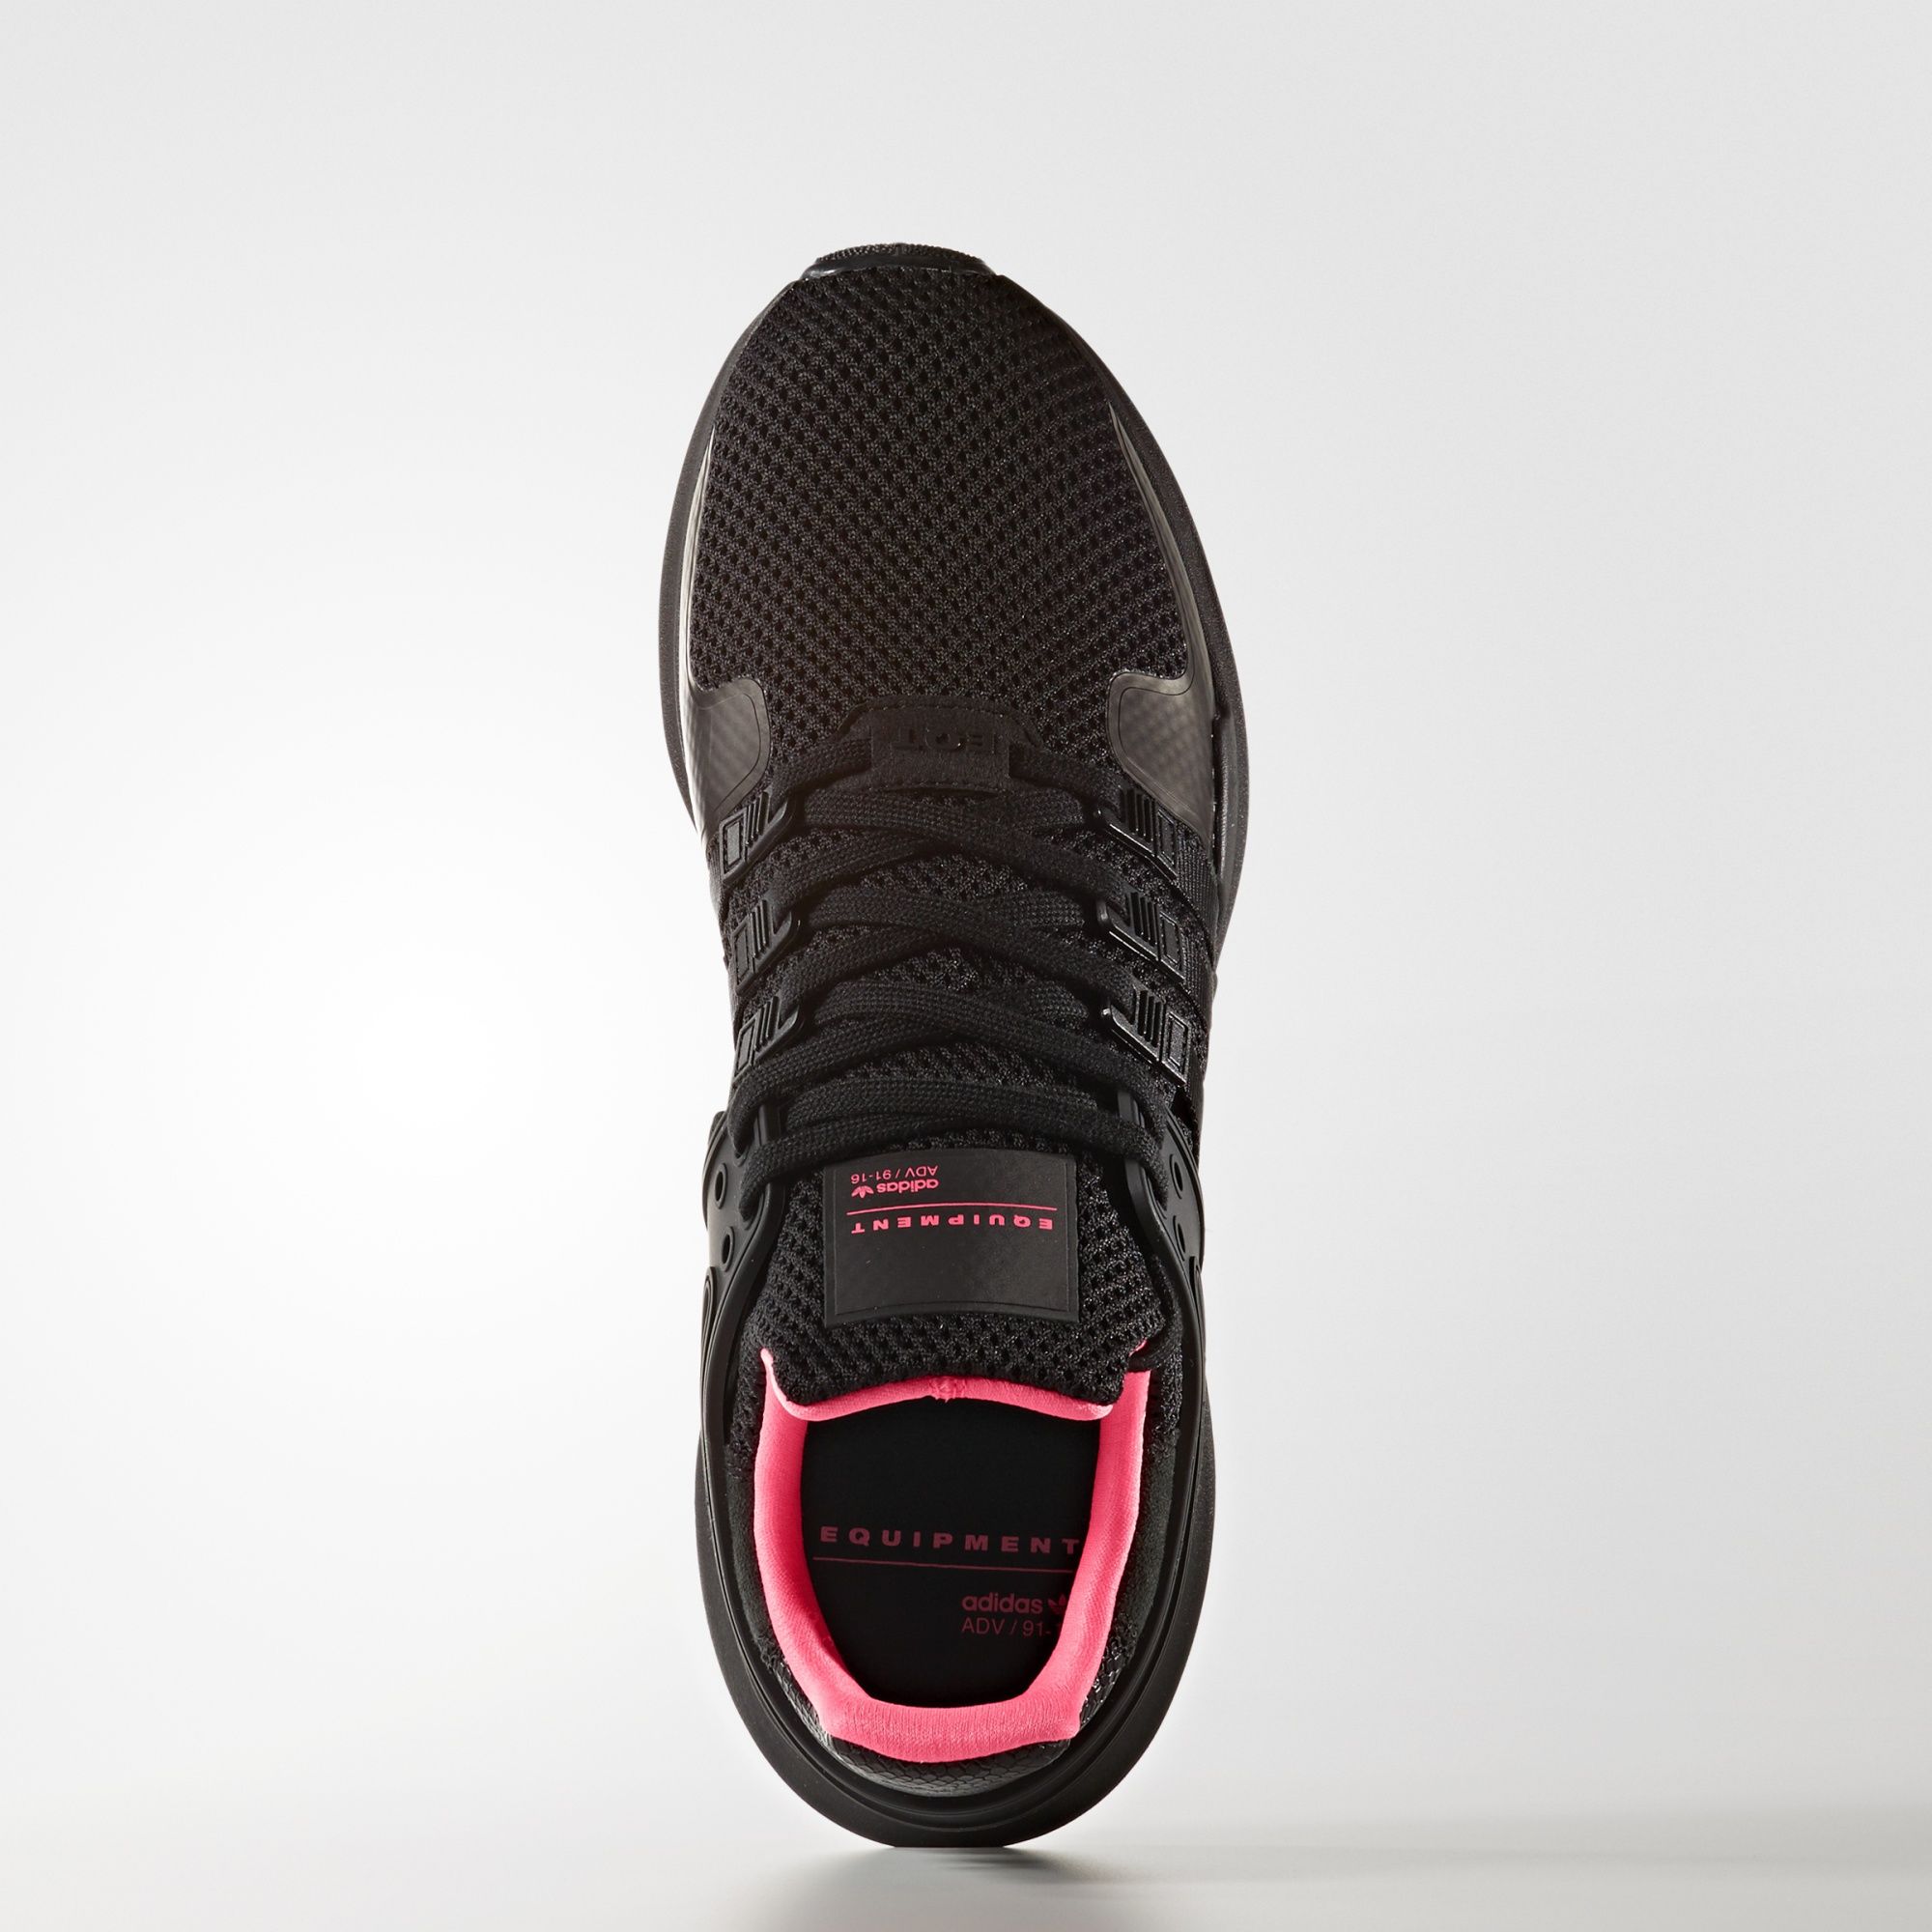 adidas-eqt-support-adv-black-solar-red-6